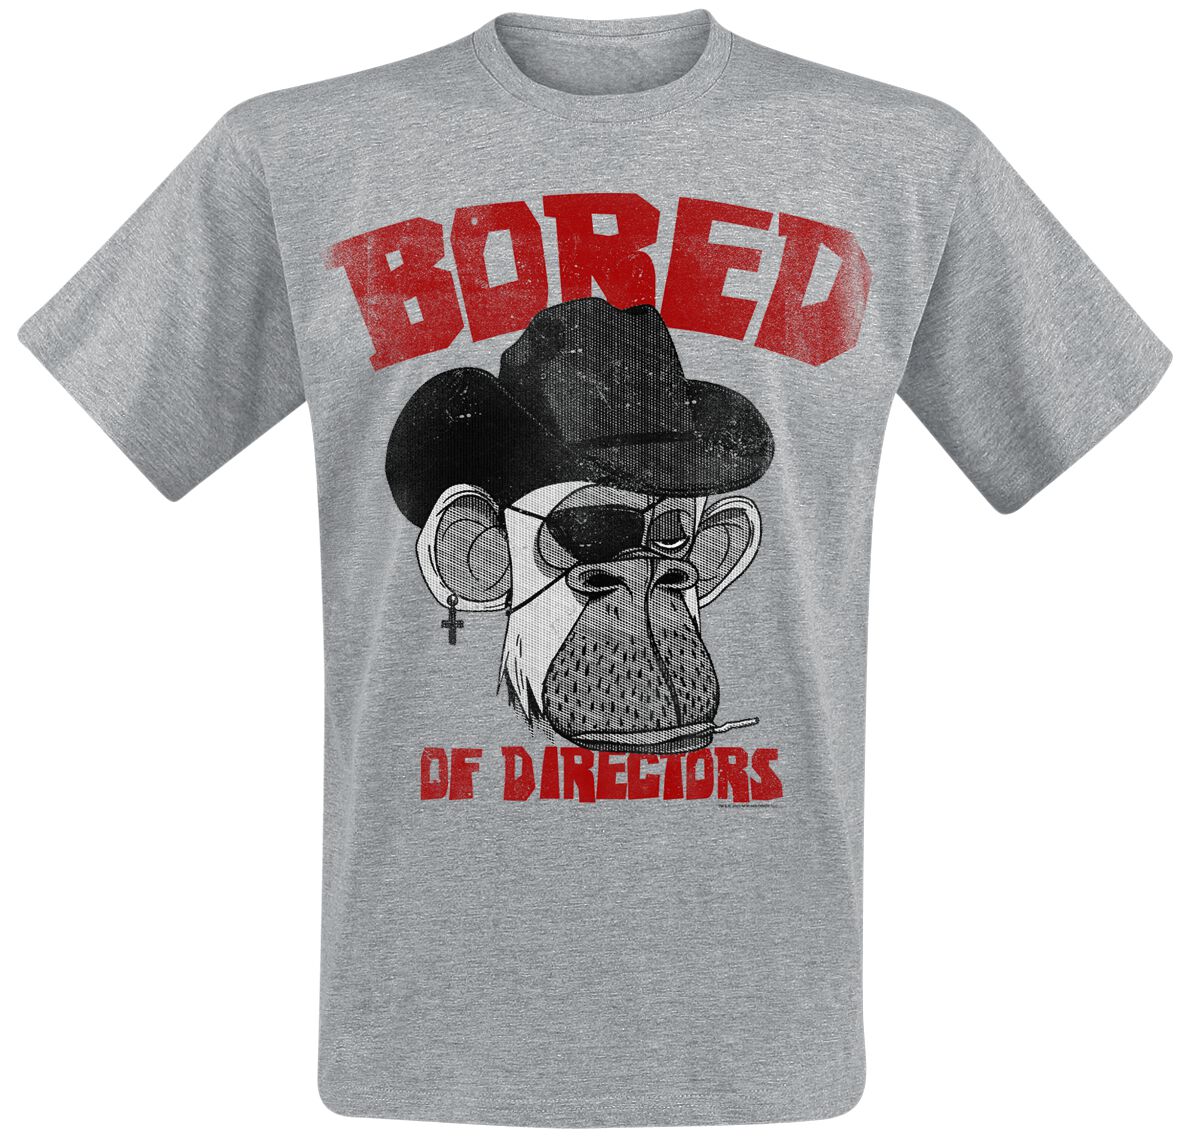 Bored Of Directors T-Shirt - Clint Apewood Vintage - S bis XXL - für Männer - Größe L - grau  - EMP exklusives Merchandise!